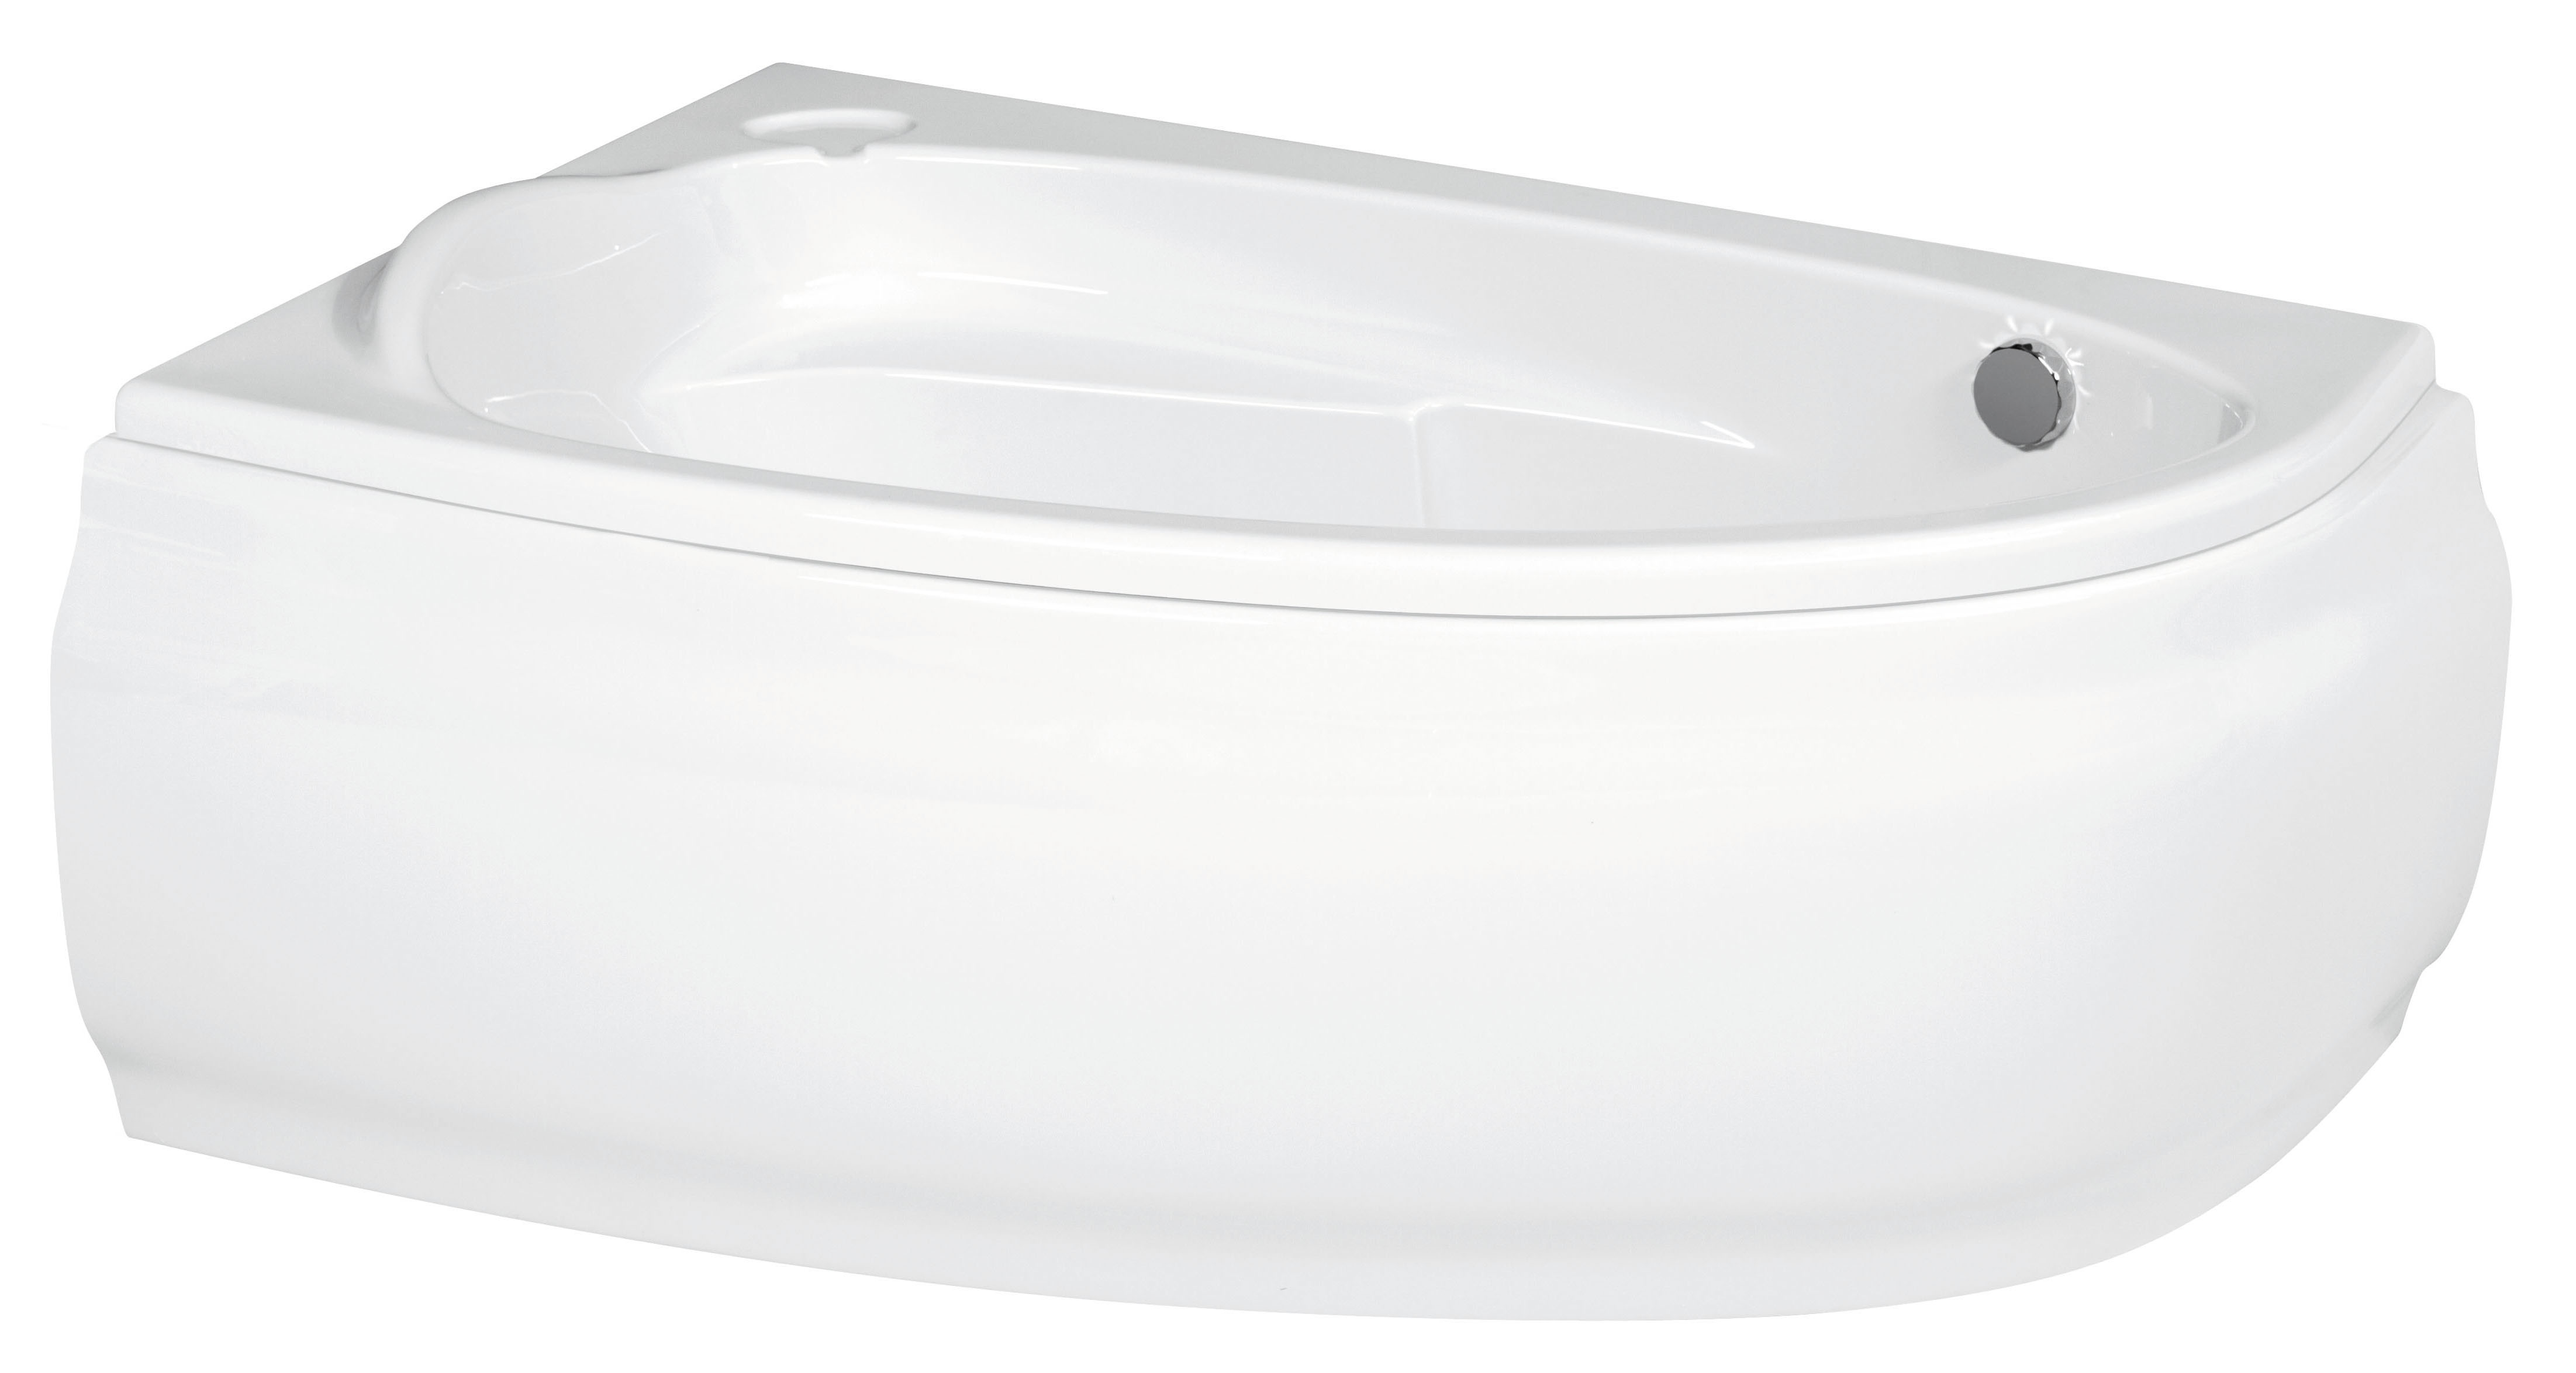 Акриловая ванна Cersanit Joanna 140x90 L ультра белая, размер 140x90, цвет белый 63334 - фото 2